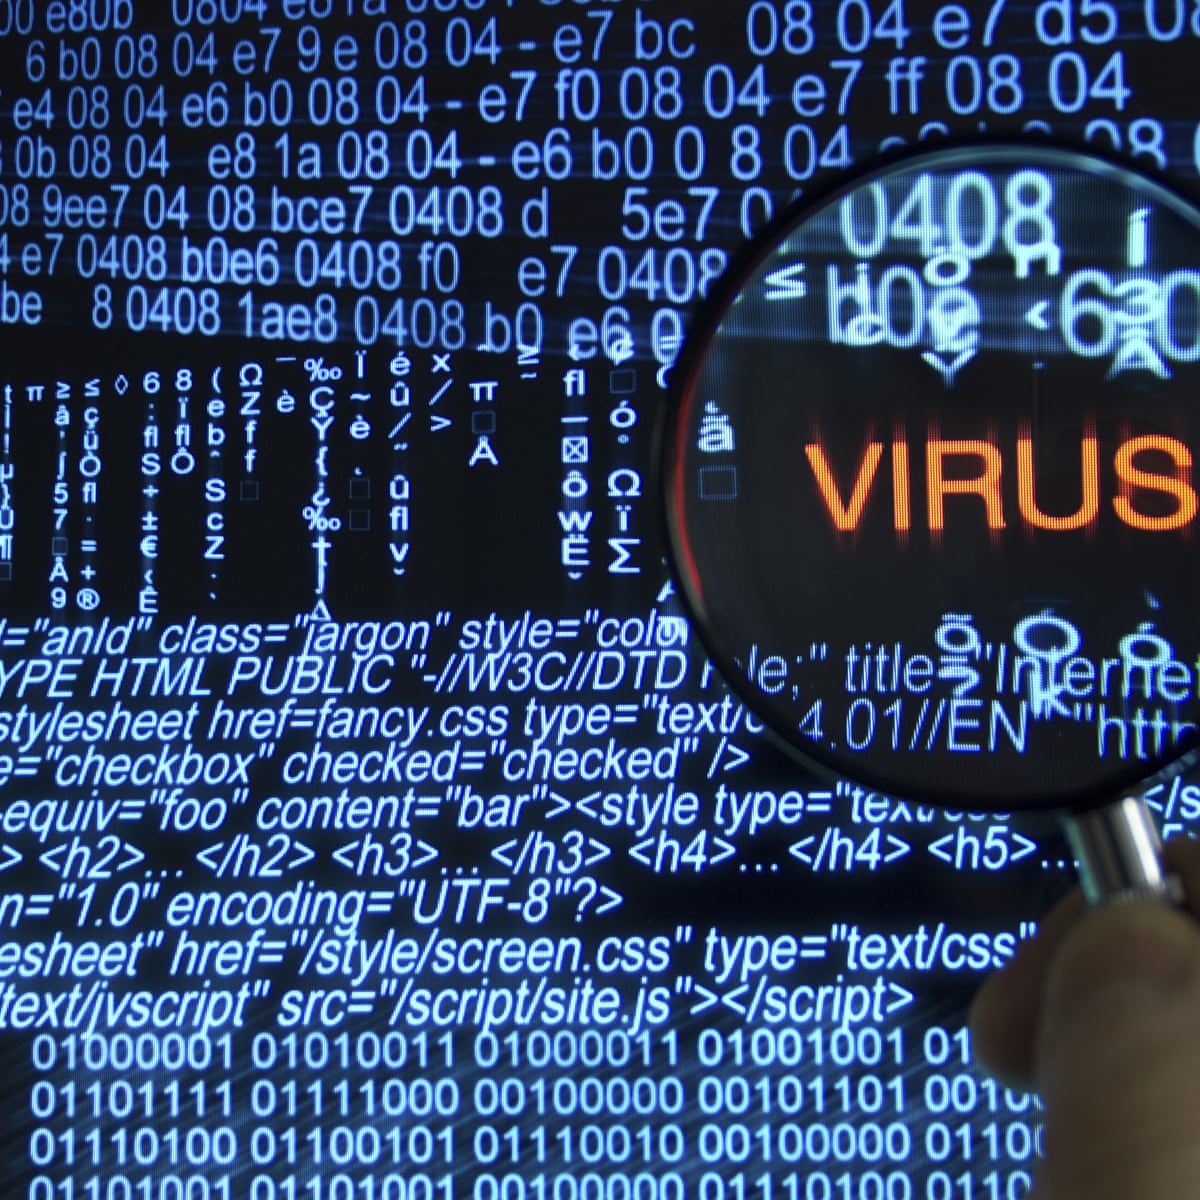 virusi malware)